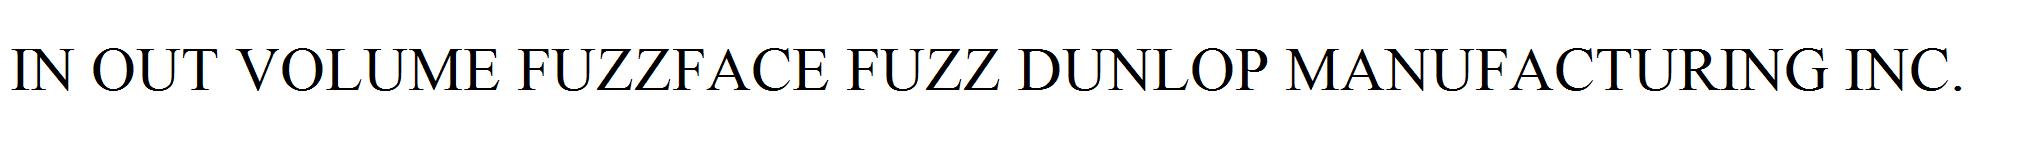 IN OUT VOLUME FUZZFACE FUZZ DUNLOP MANUFACTURING INC.